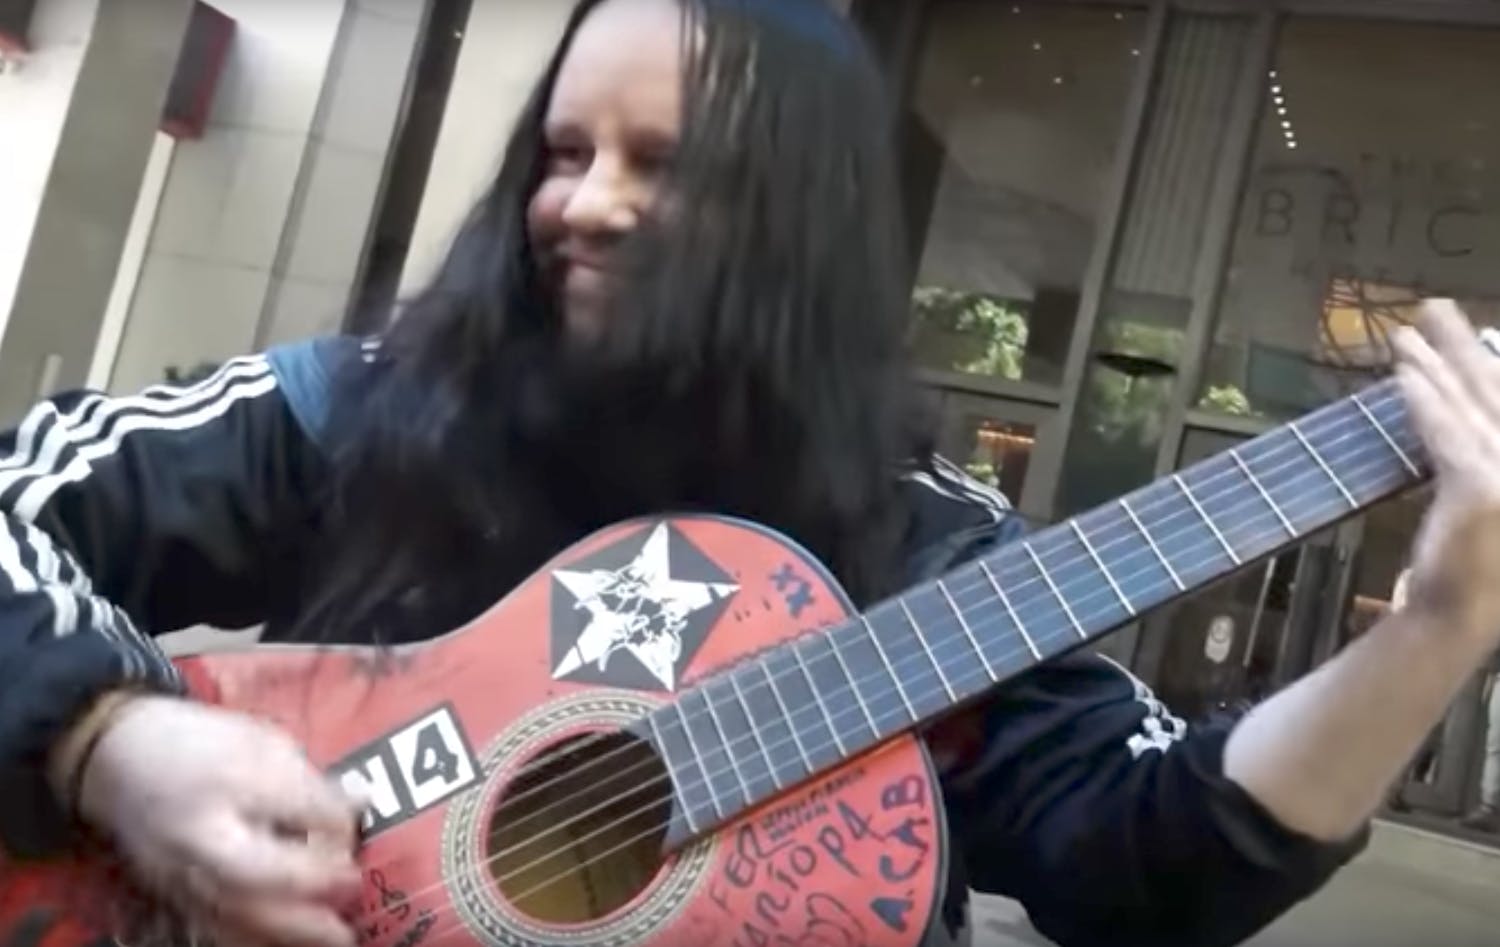 Joey Jordison plays Slipknot's (sic) on an acoustic guitar